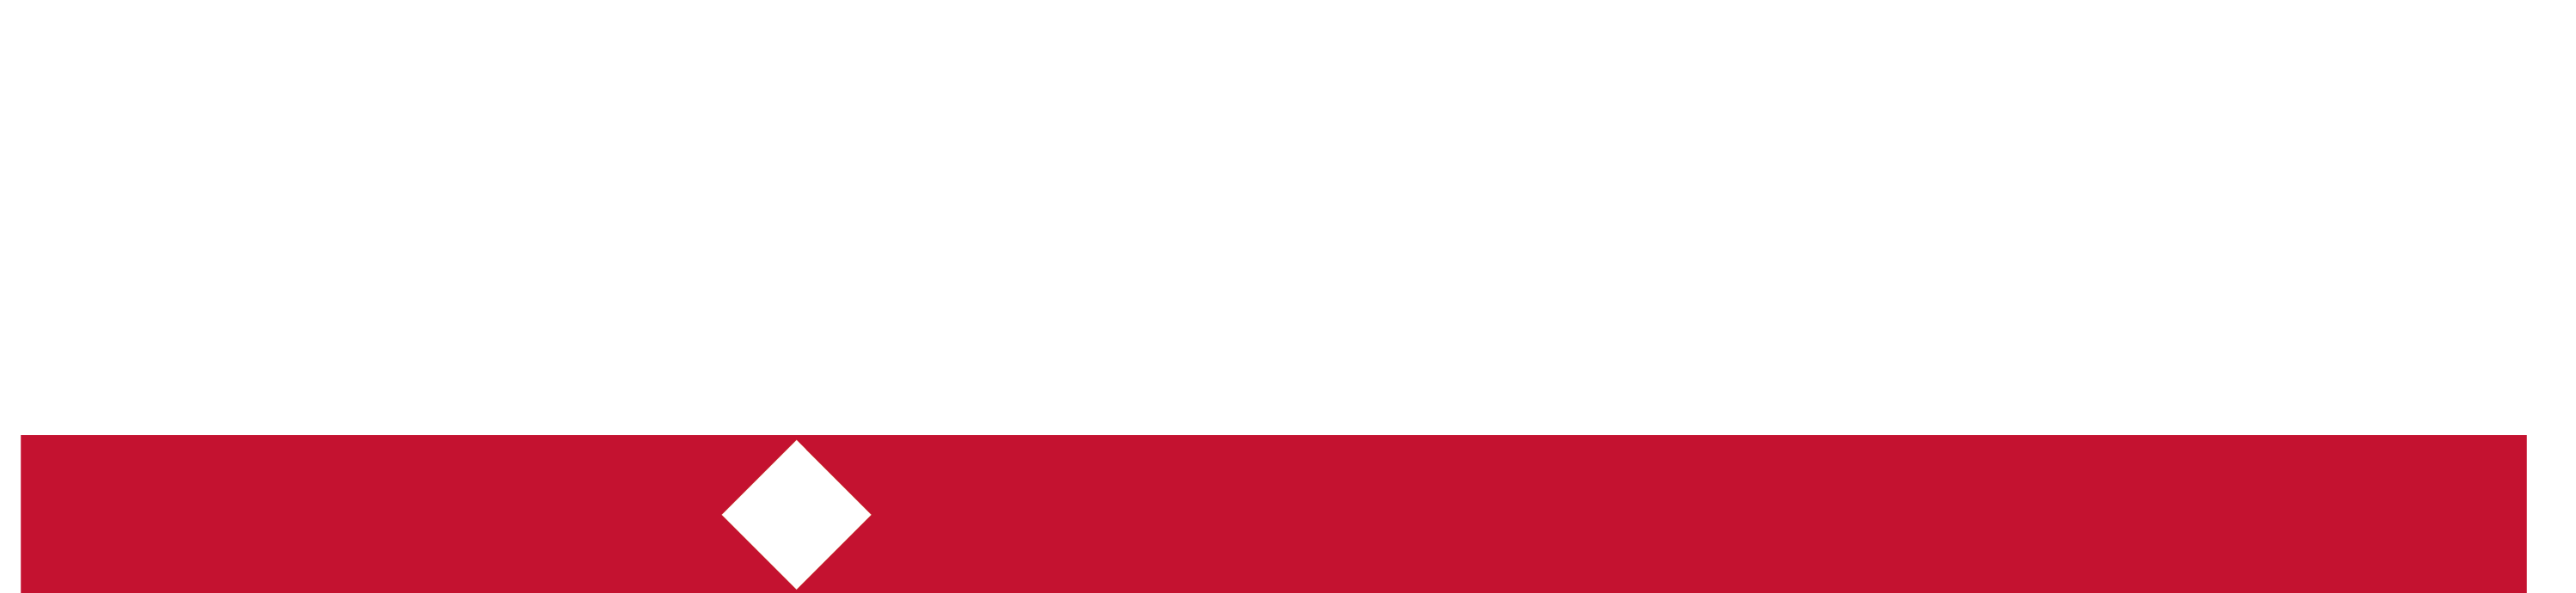 Red and White Diamond Logo - College Logos - Marketing Toolbox - Davidson College